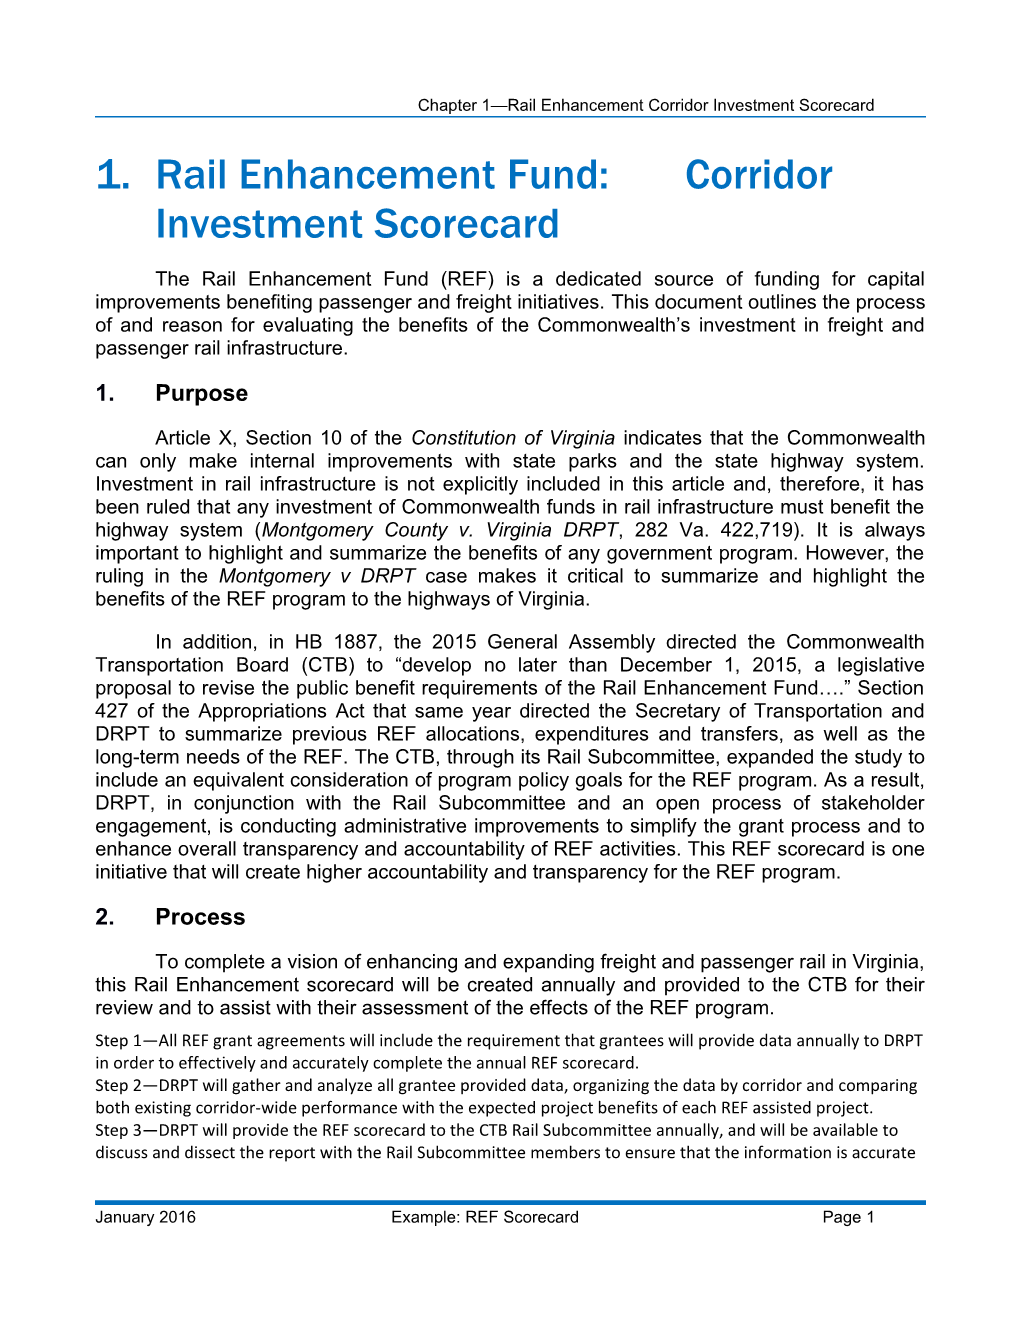 1.Rail Enhancement Fund: Corridor Investment Scorecard